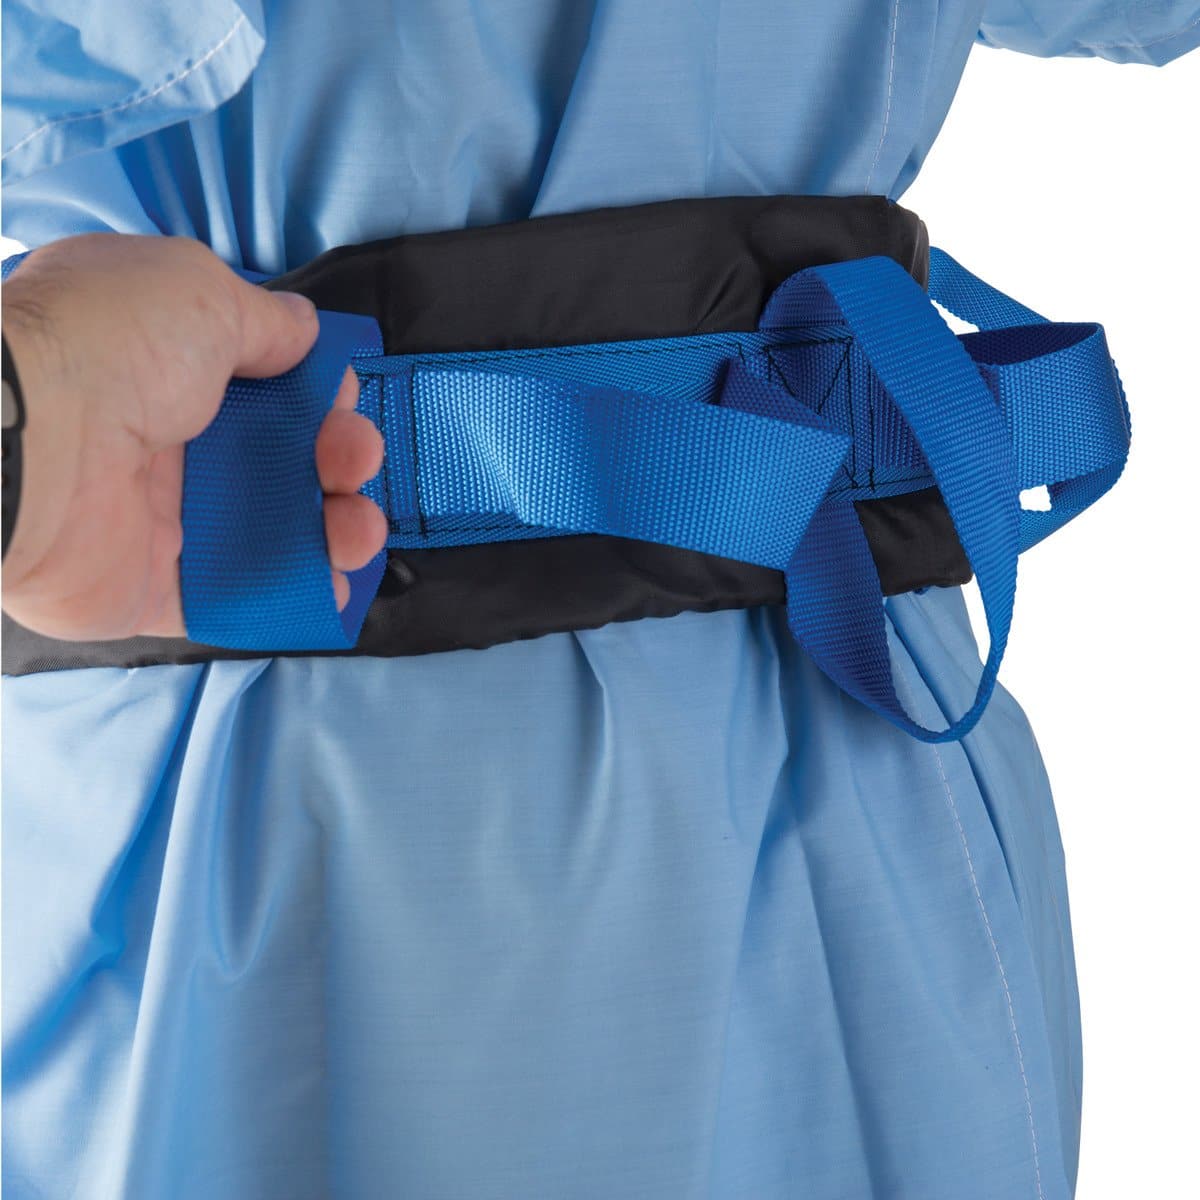 DMI Deluxe Adjustable Nylon Transfer Gait Belt With Handles & Buckle - Senior.com Gait Belts